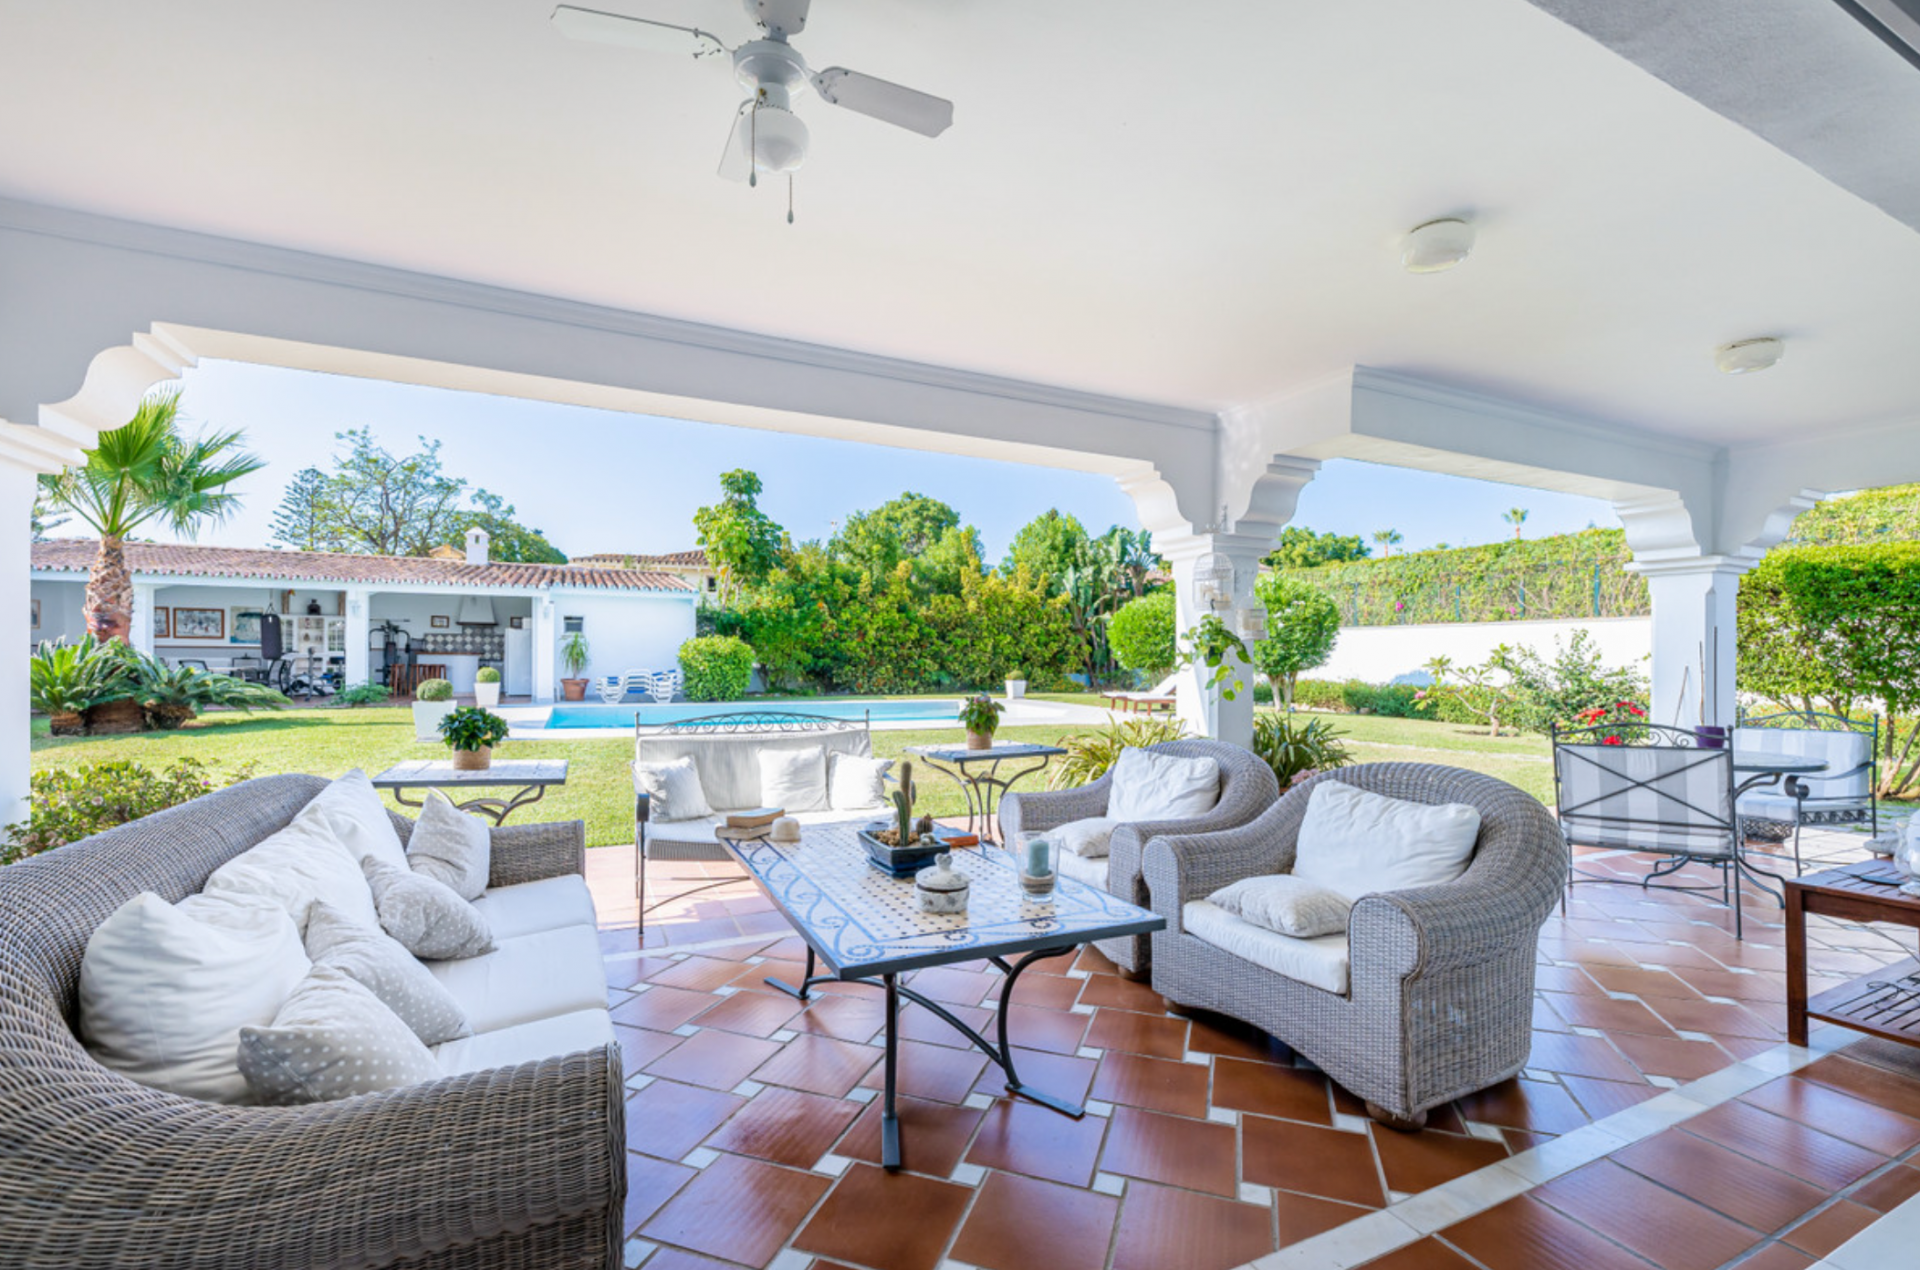 Magnificent villa situated in the prestigious area of Casasola - Guadalmina Baja very close to the beach